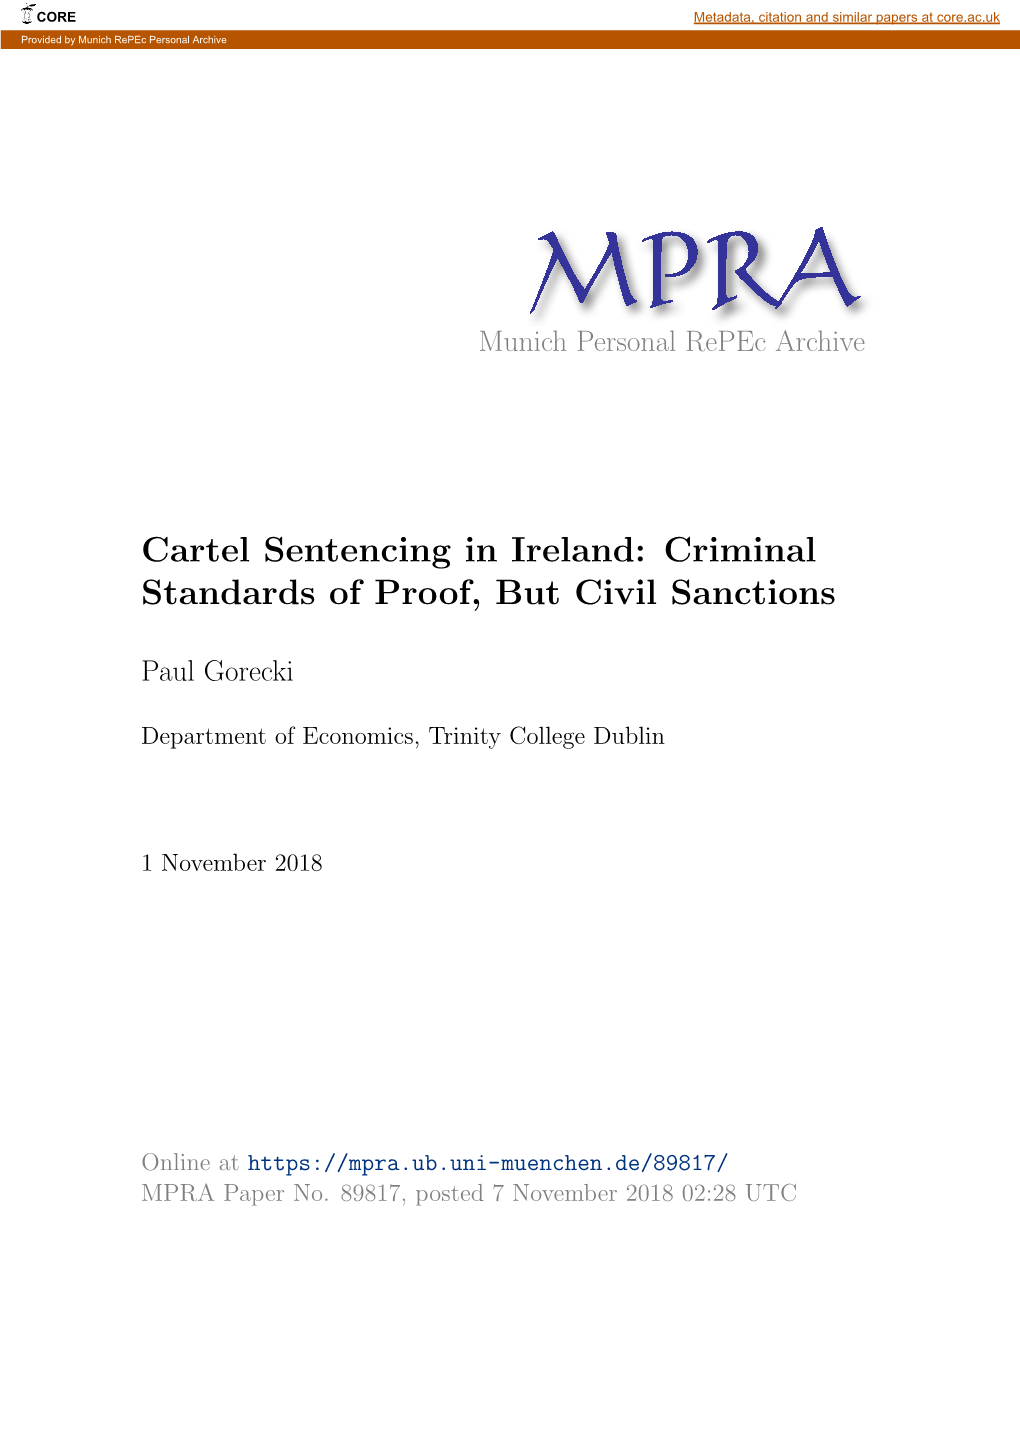 Cartel Sentencing in Ireland: Criminal Standards of Proof, but Civil Sanctions